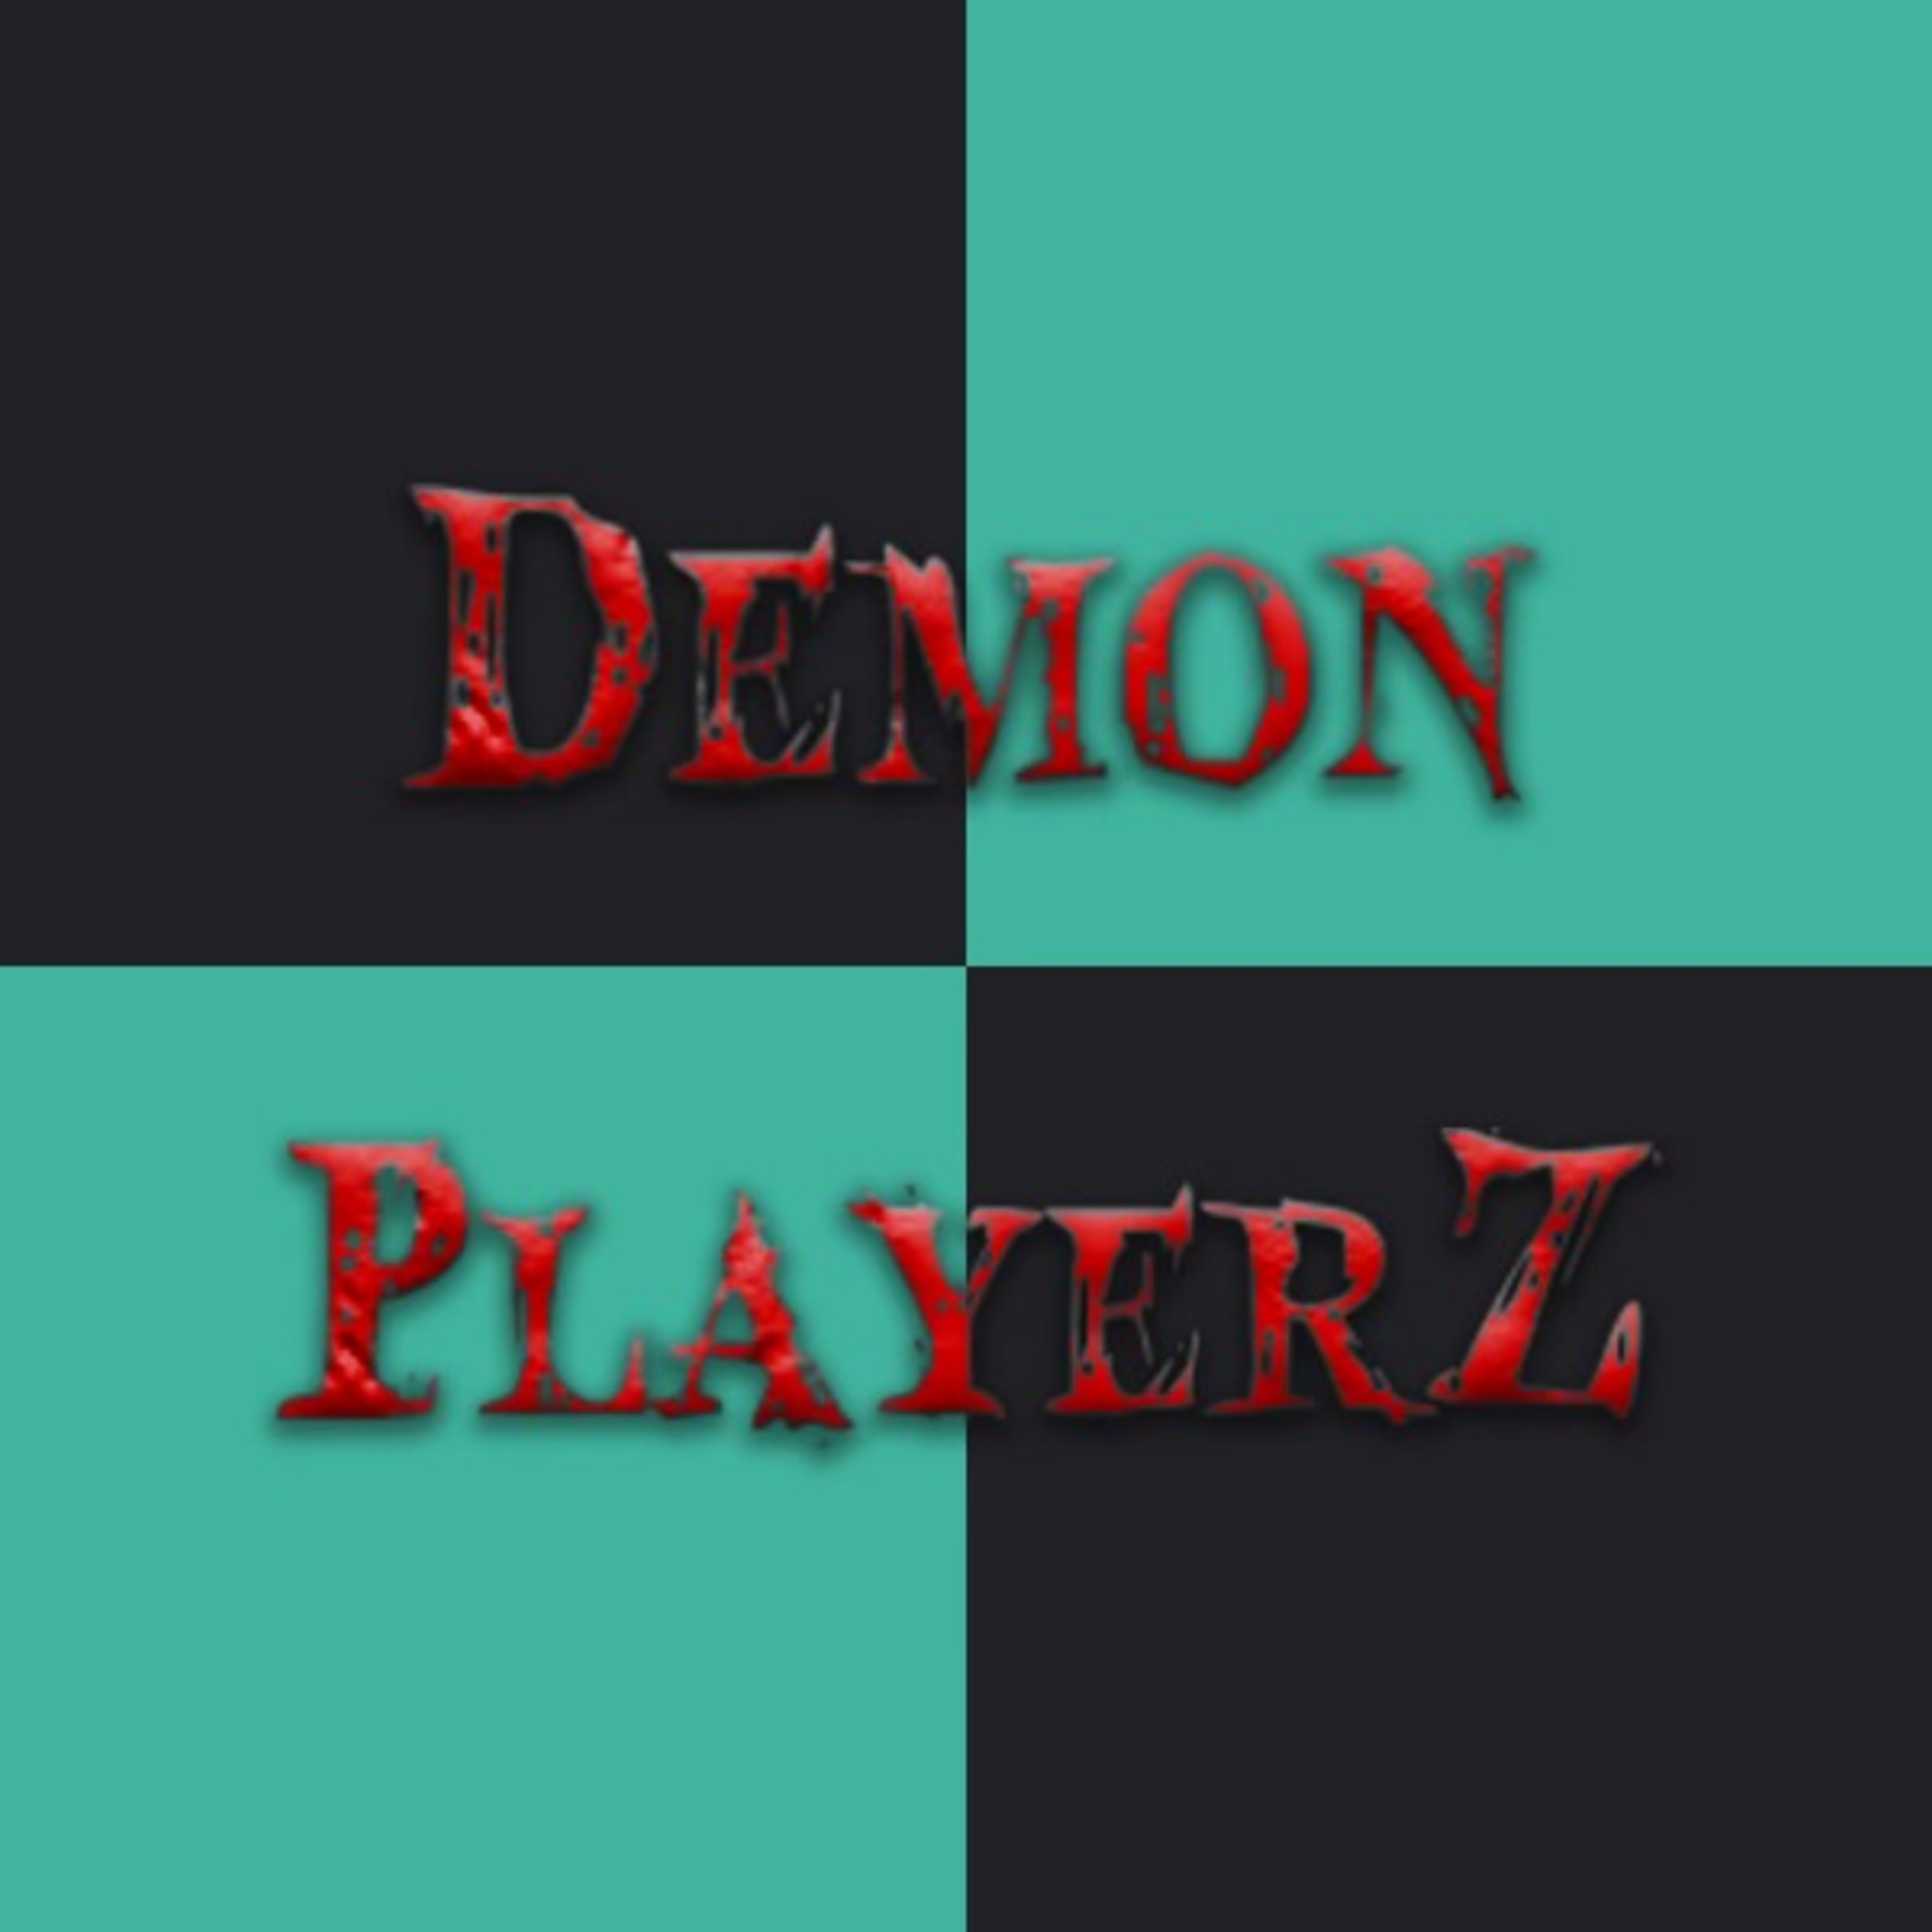 Demon PlayerZ